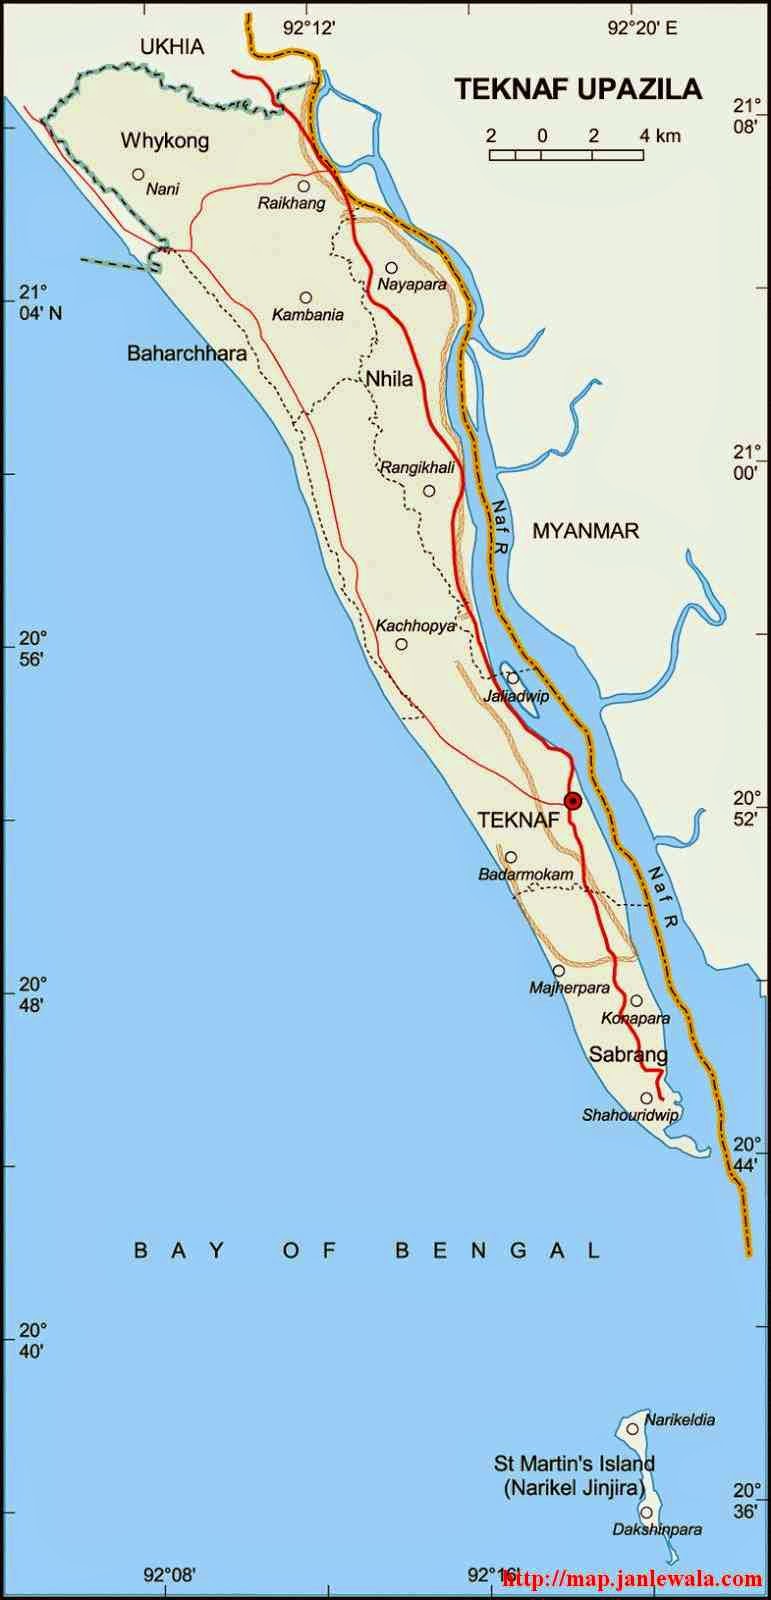 teknaf upazila map of bangladesh